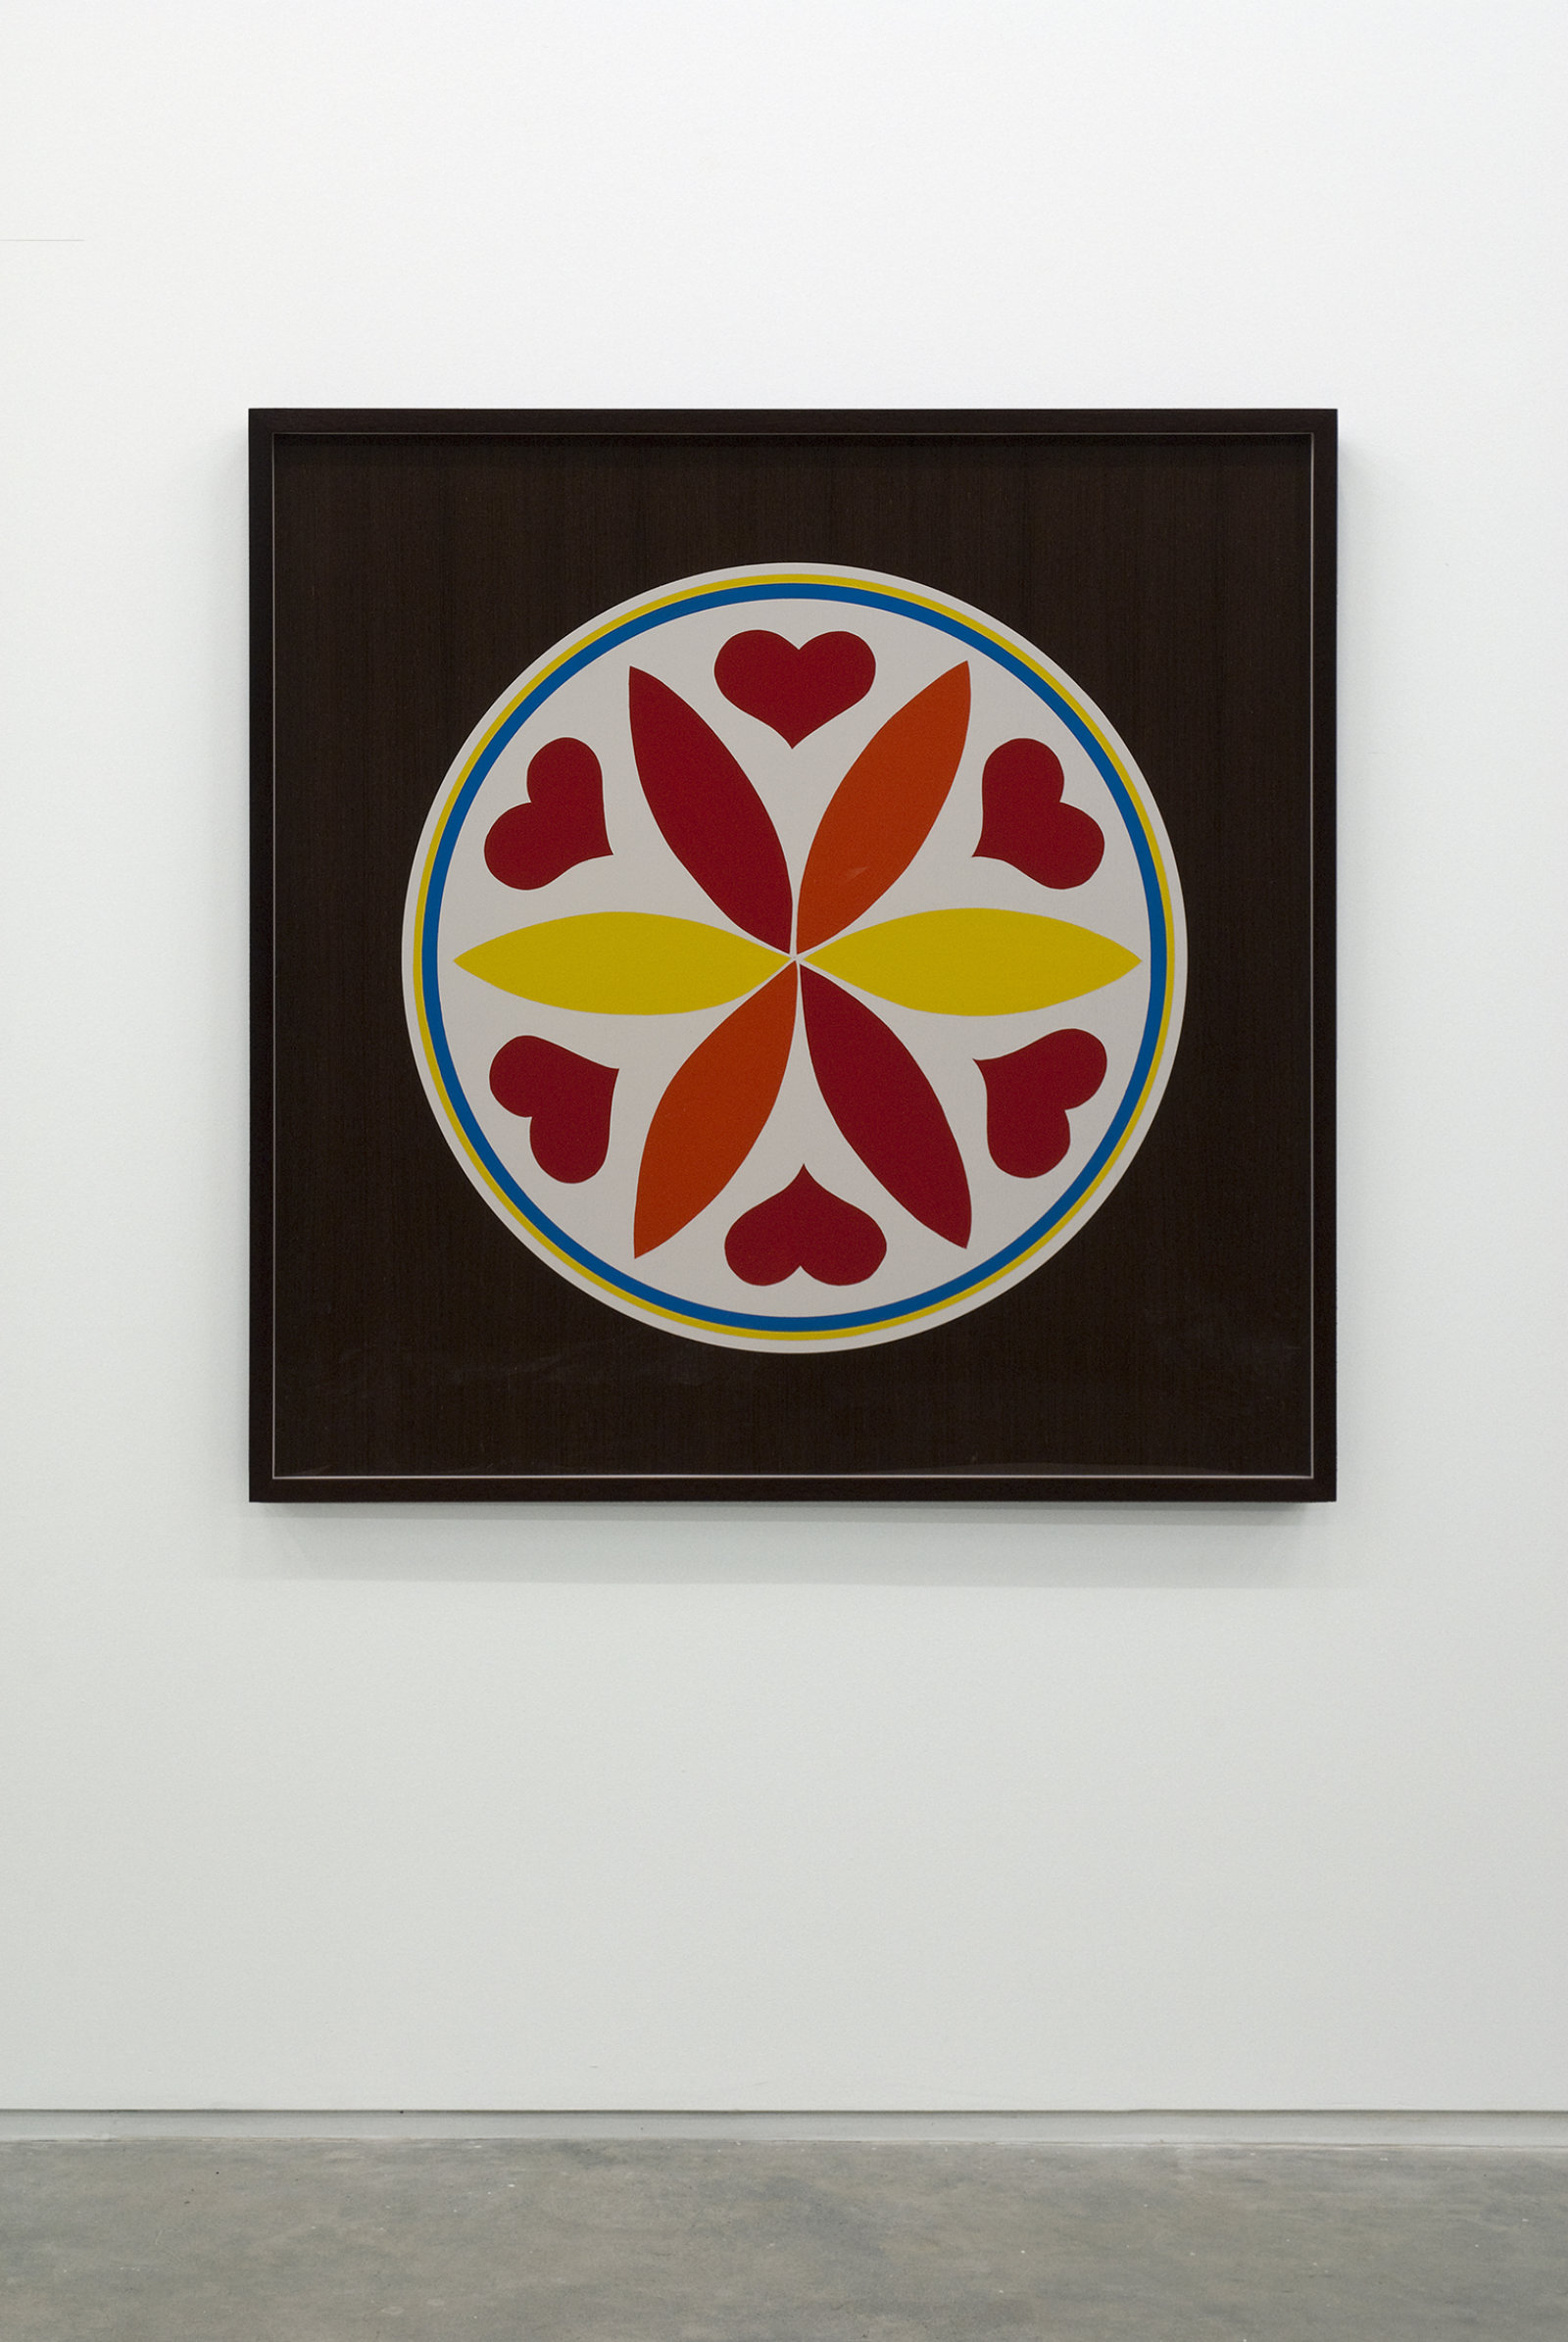 Myfanwy MacLeod, Hex IV, 2009, enamel on wood, 48 x 48 in. (122 x 122 cm)